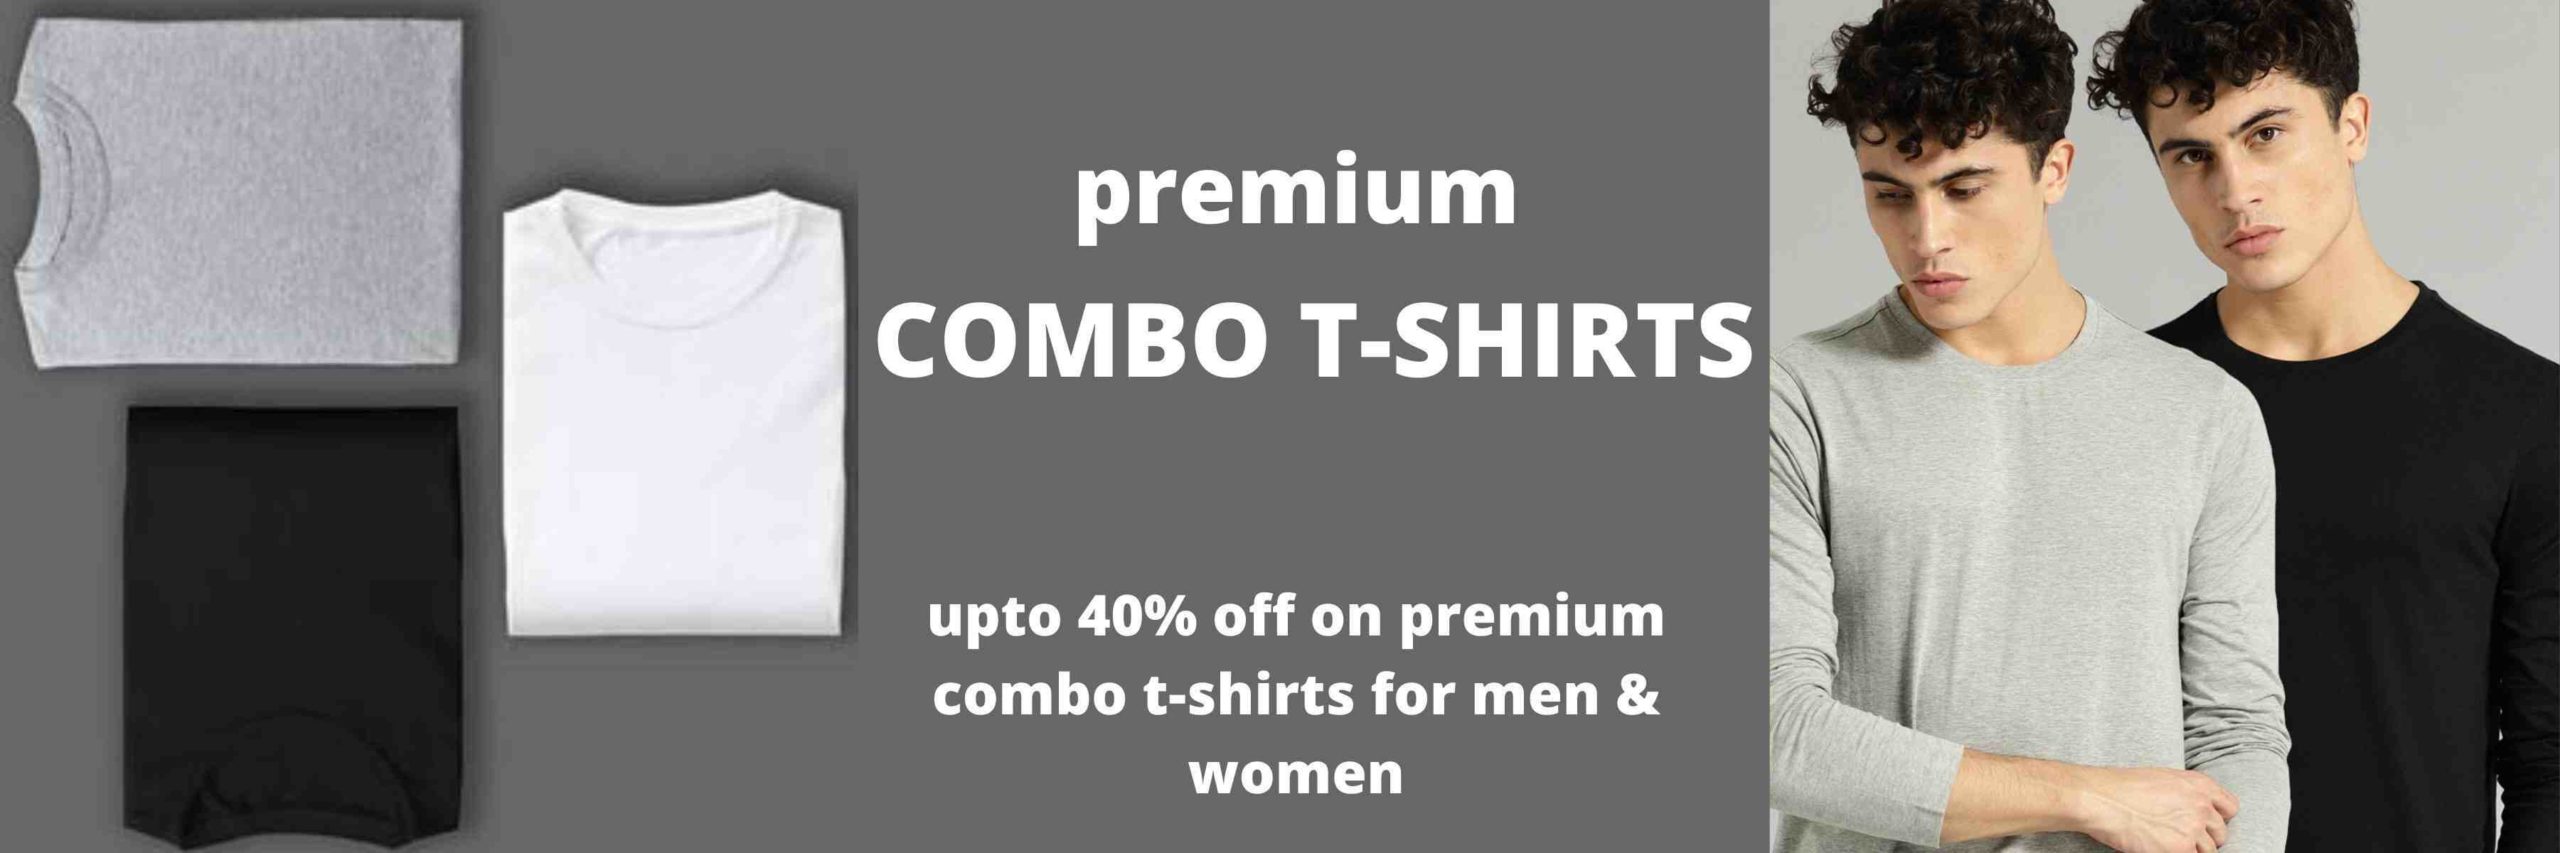 premium combo t-shirts - modaGin.com